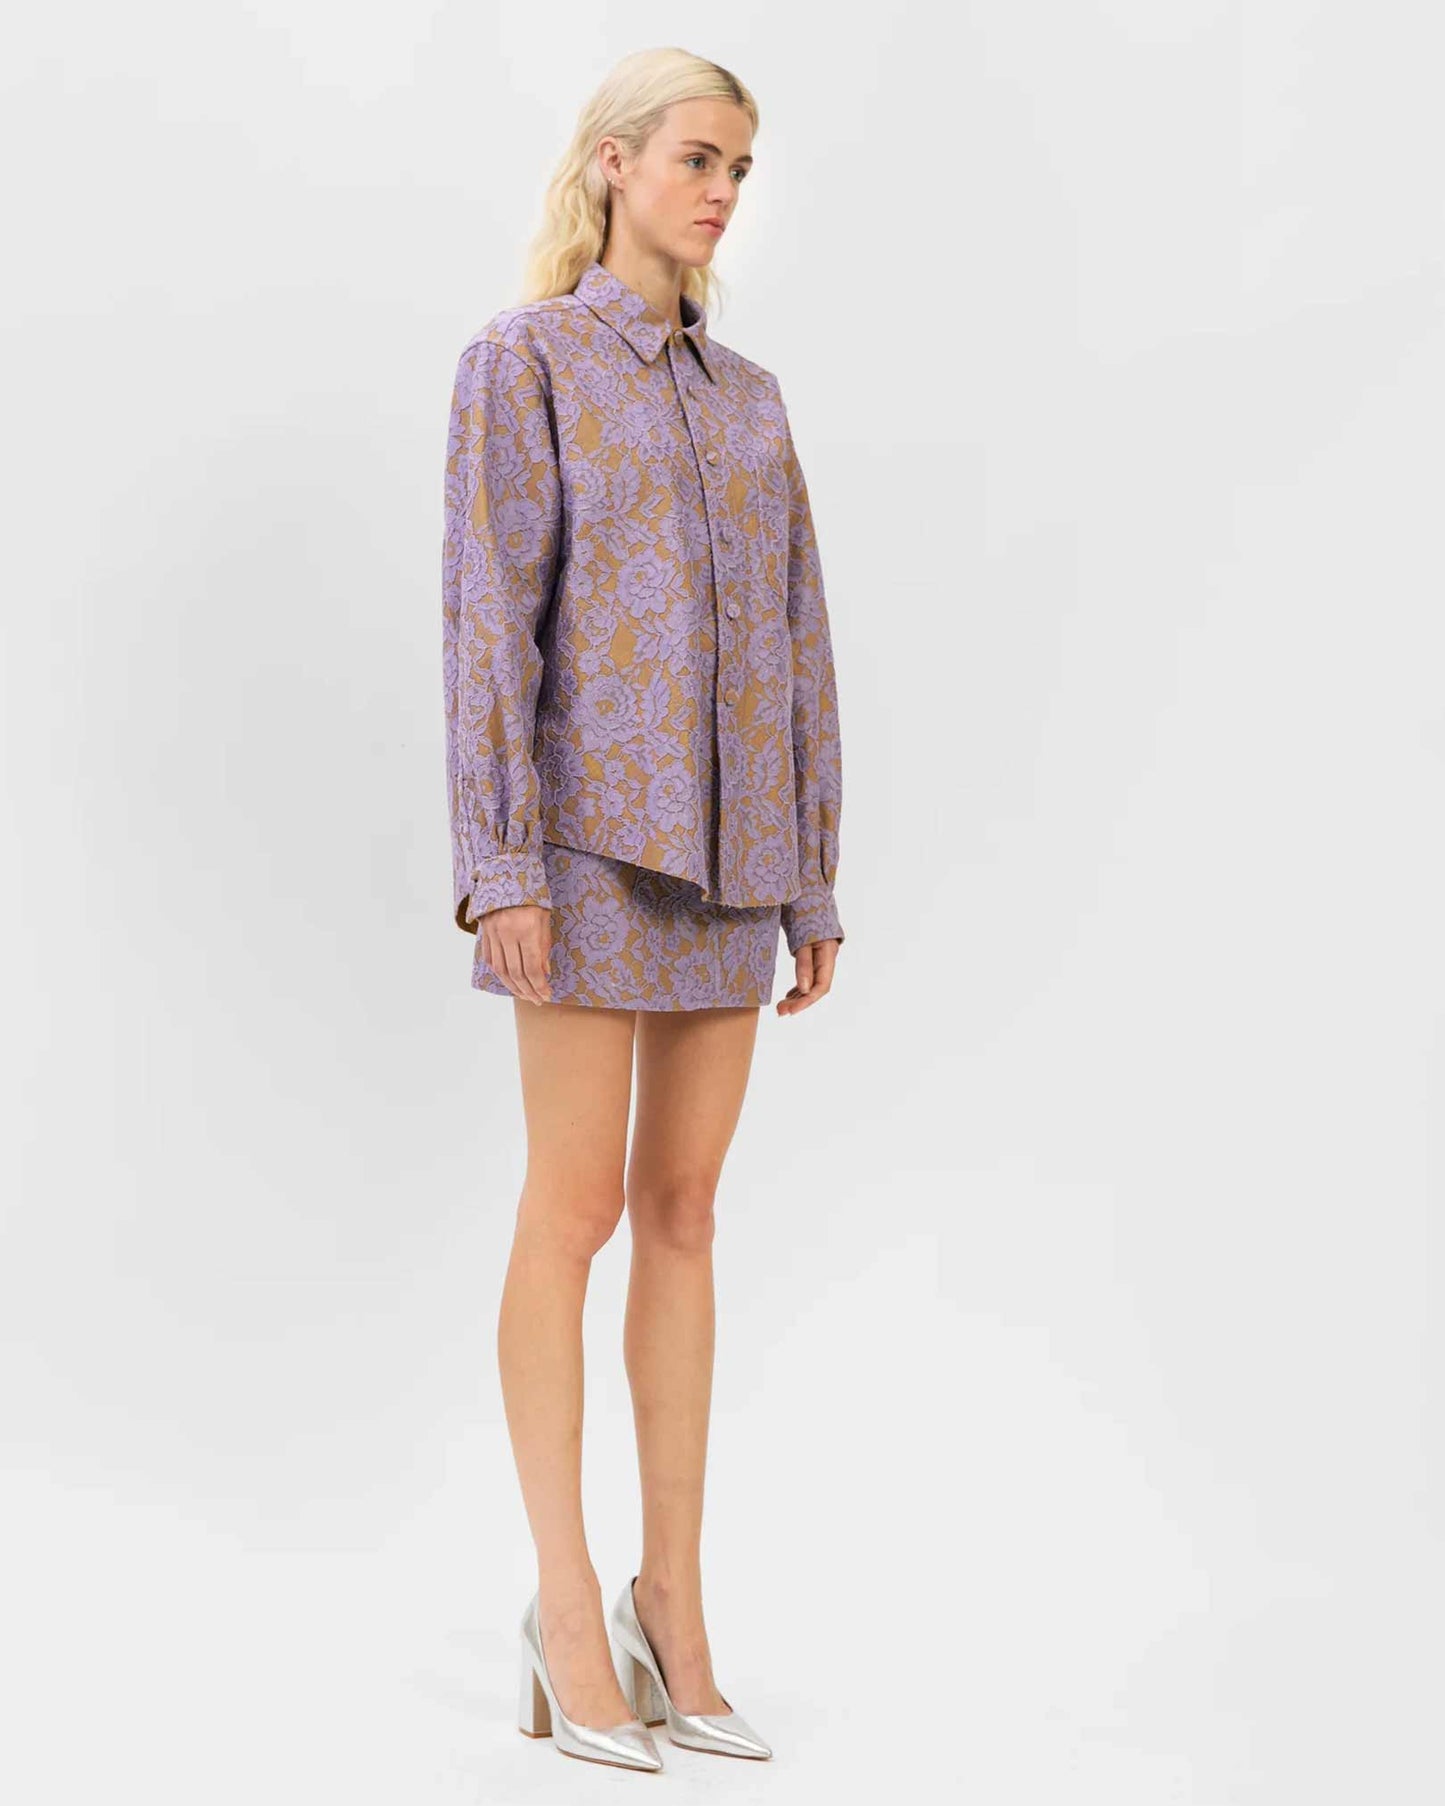 AKNVAS Rubin Lace Mini Skirt in Amethyst available at Lahn.shop